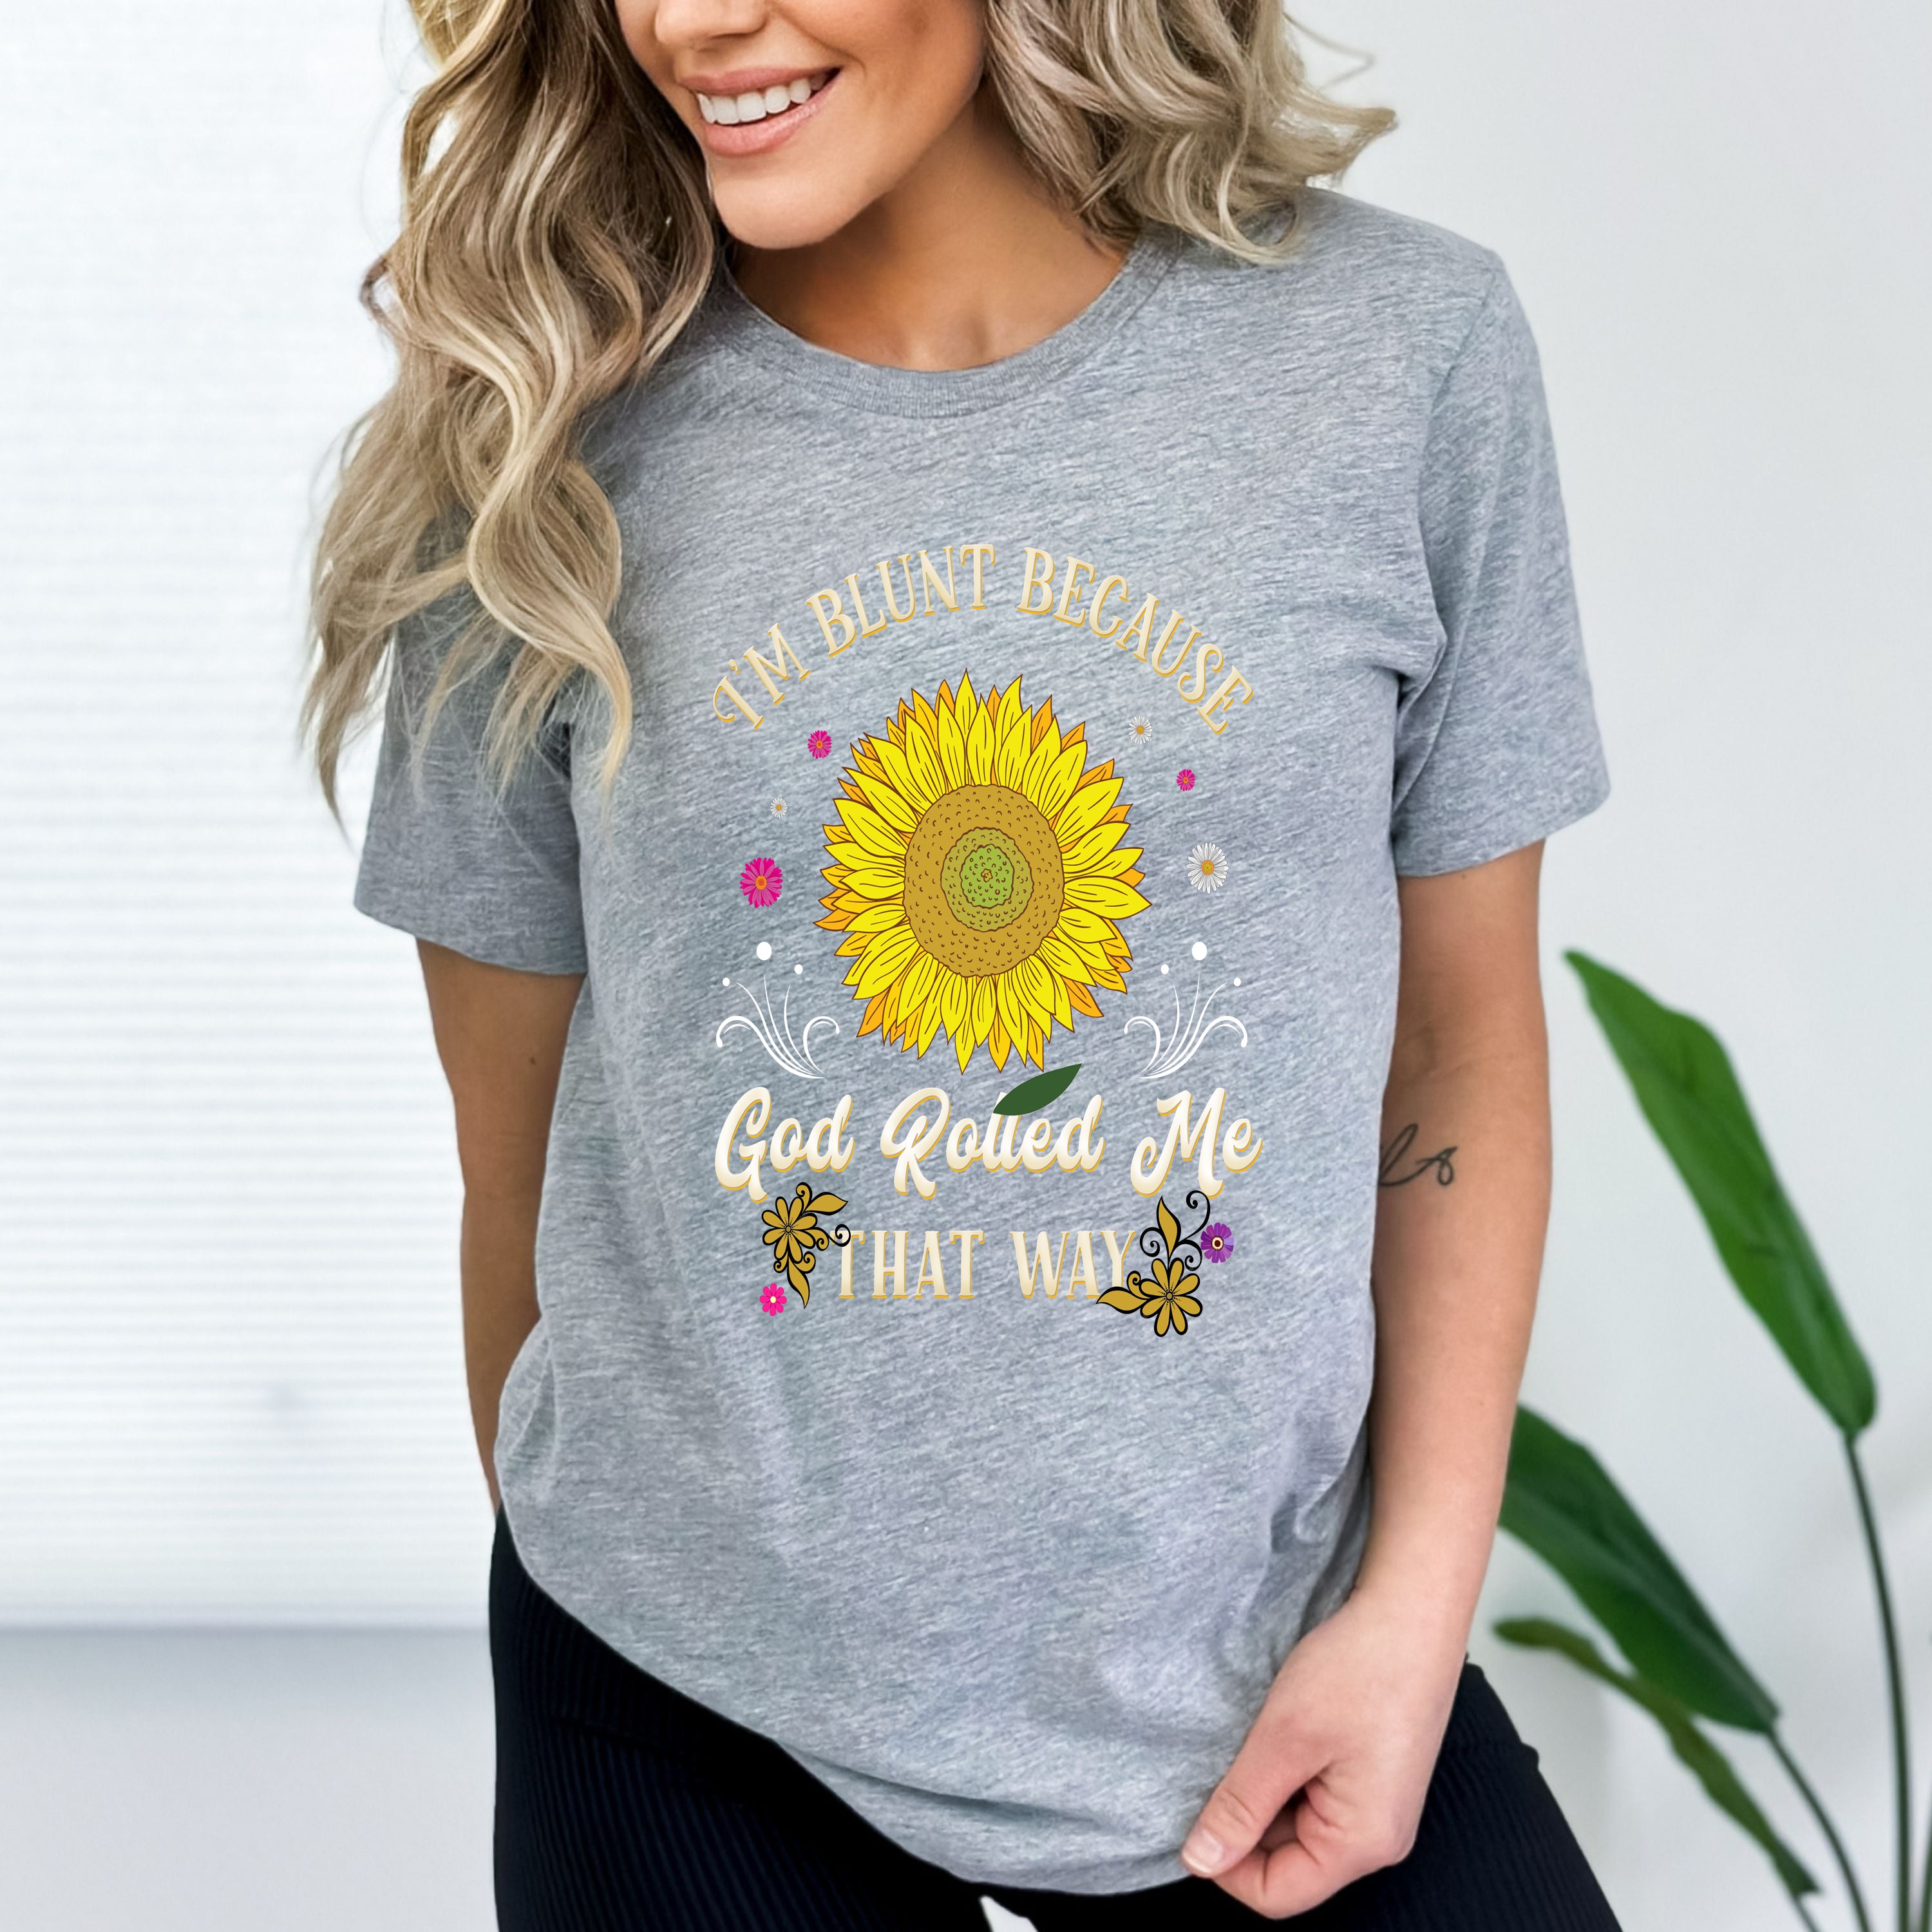 "I'M BLUNT BECAUSE -Sunflower Design"